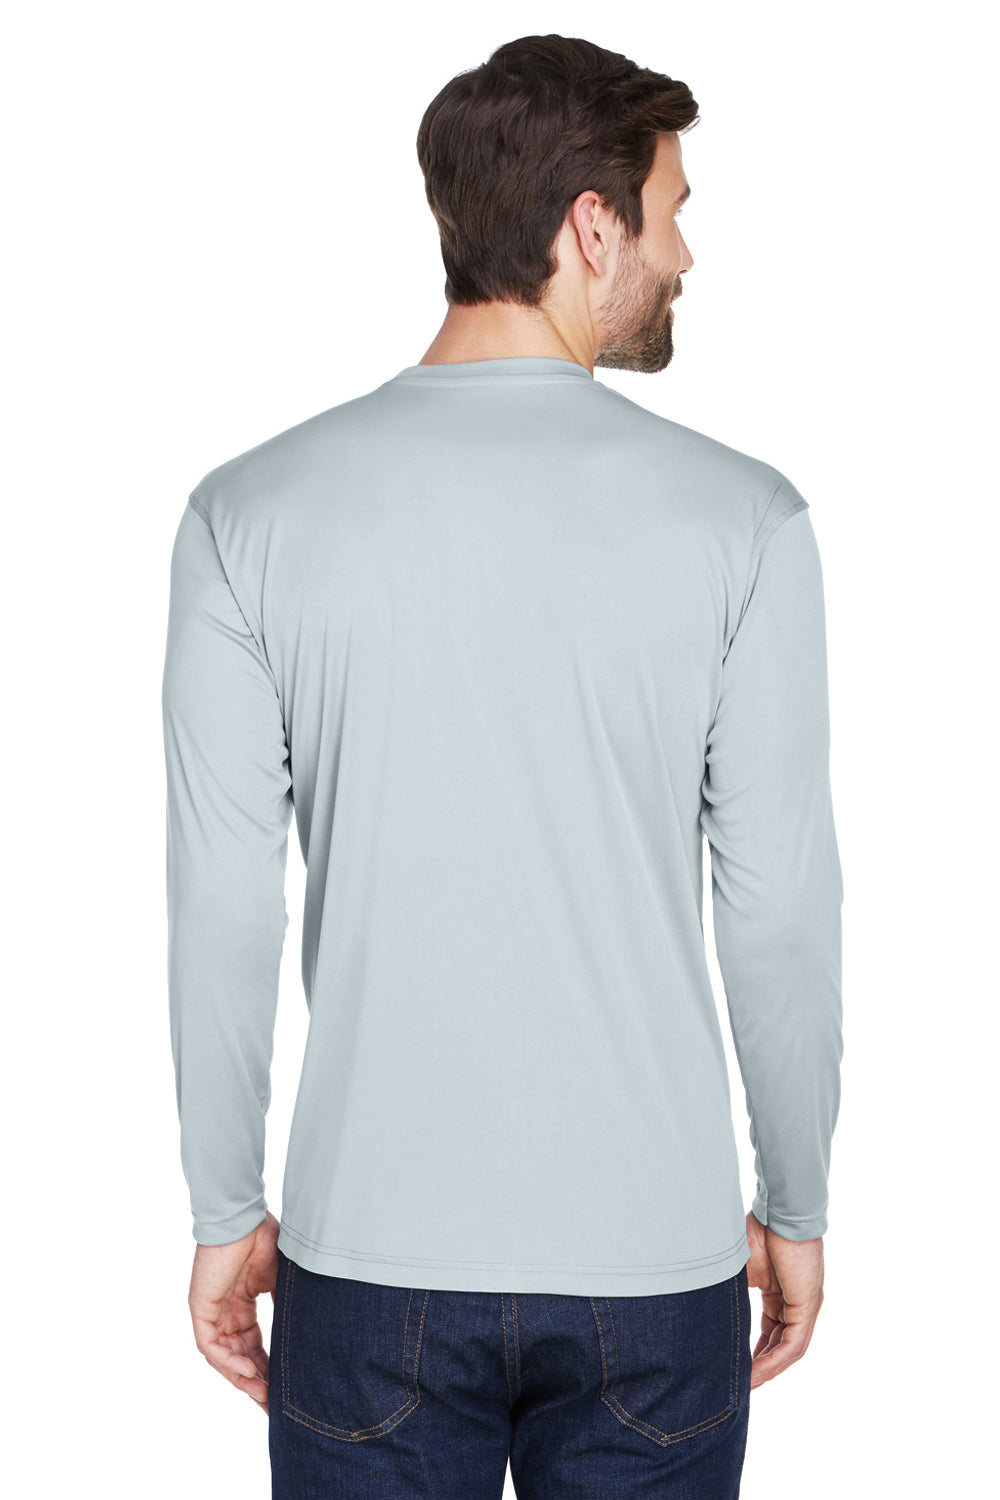 UltraClub 8422 Mens Cool & Dry Performance Moisture Wicking Long Sleeve Crewneck T-Shirt Grey Back